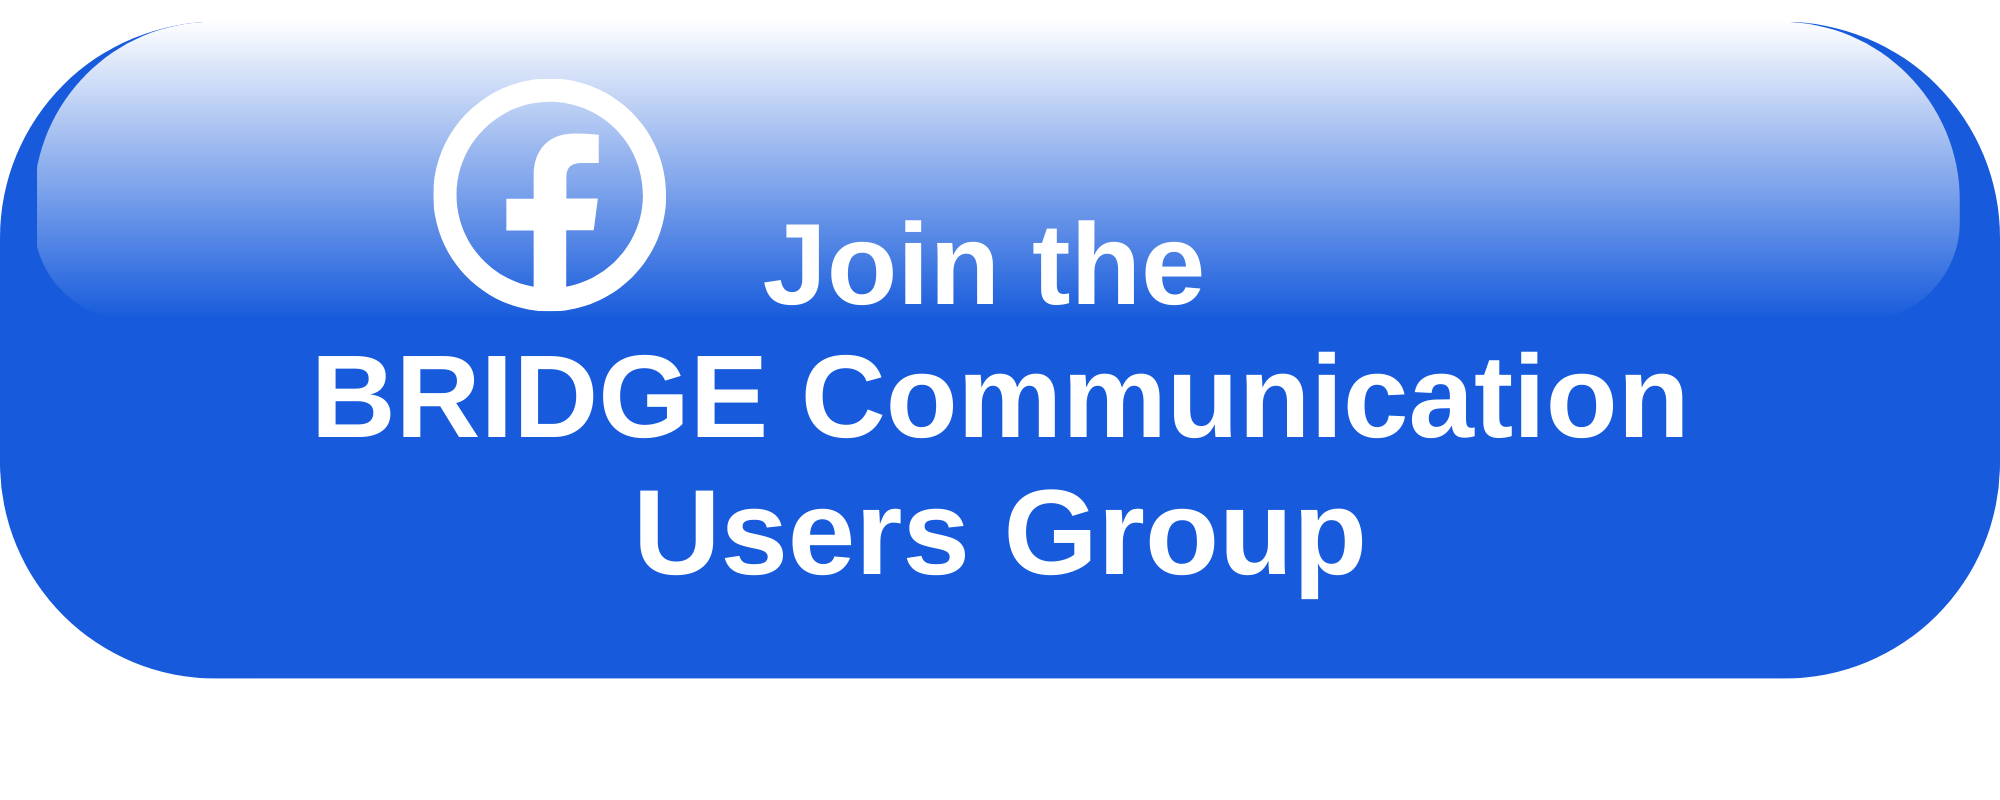 BRIDGE Communication app. Facebook BRIDGE Communication Users Group.